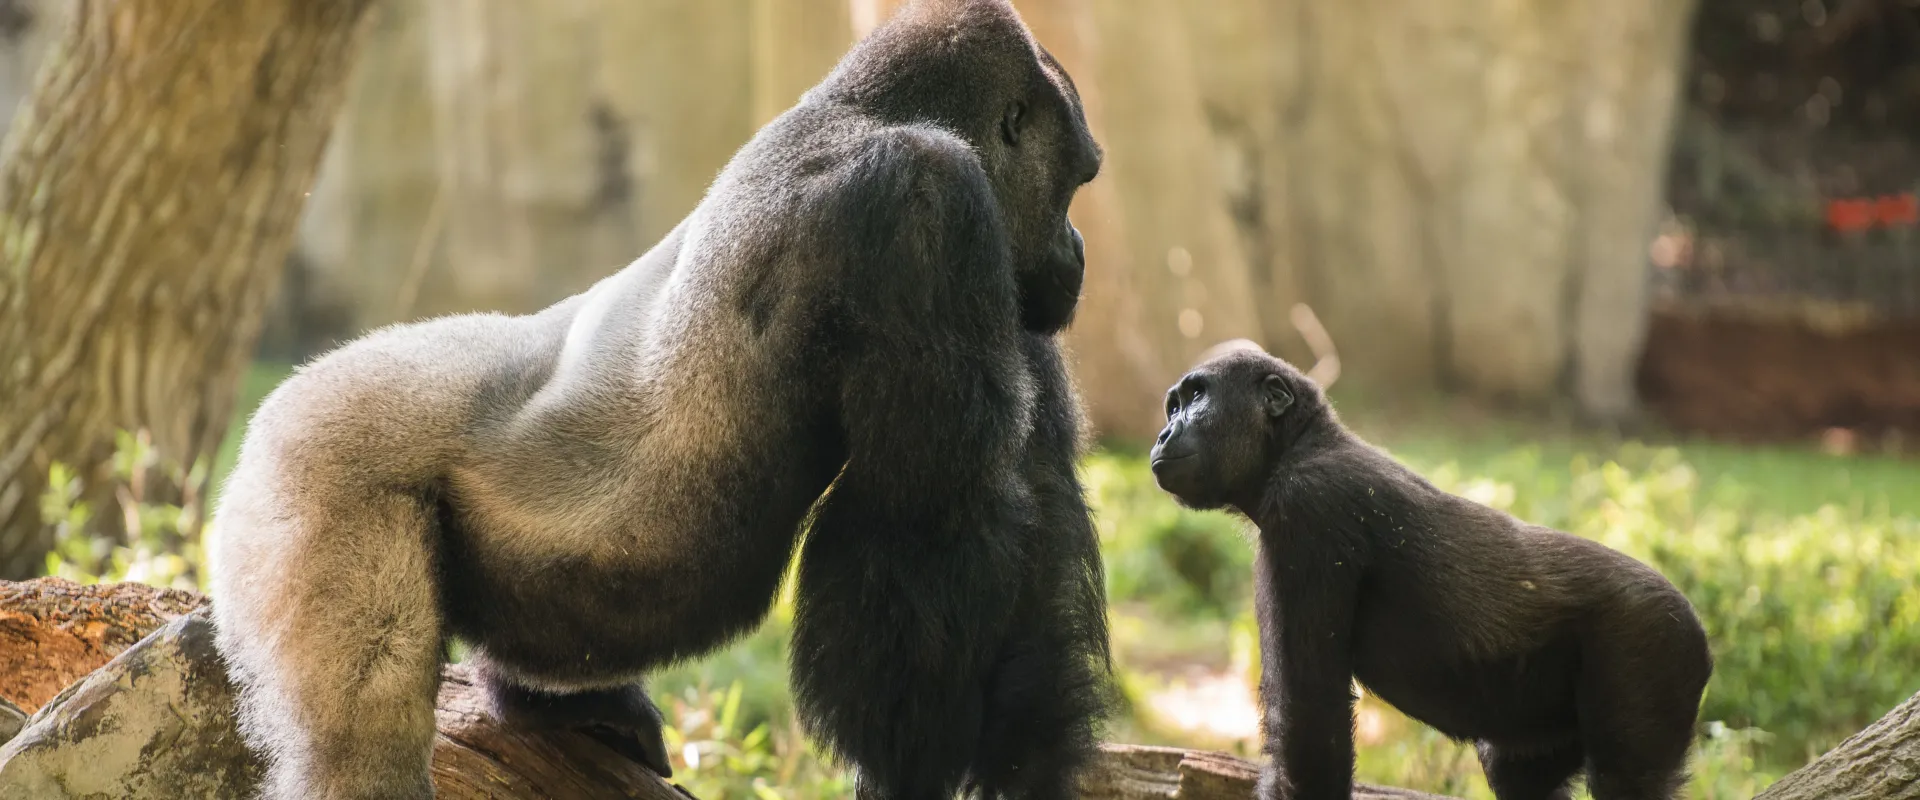 8 Fun Facts about Mosuba the Silverback Gorilla